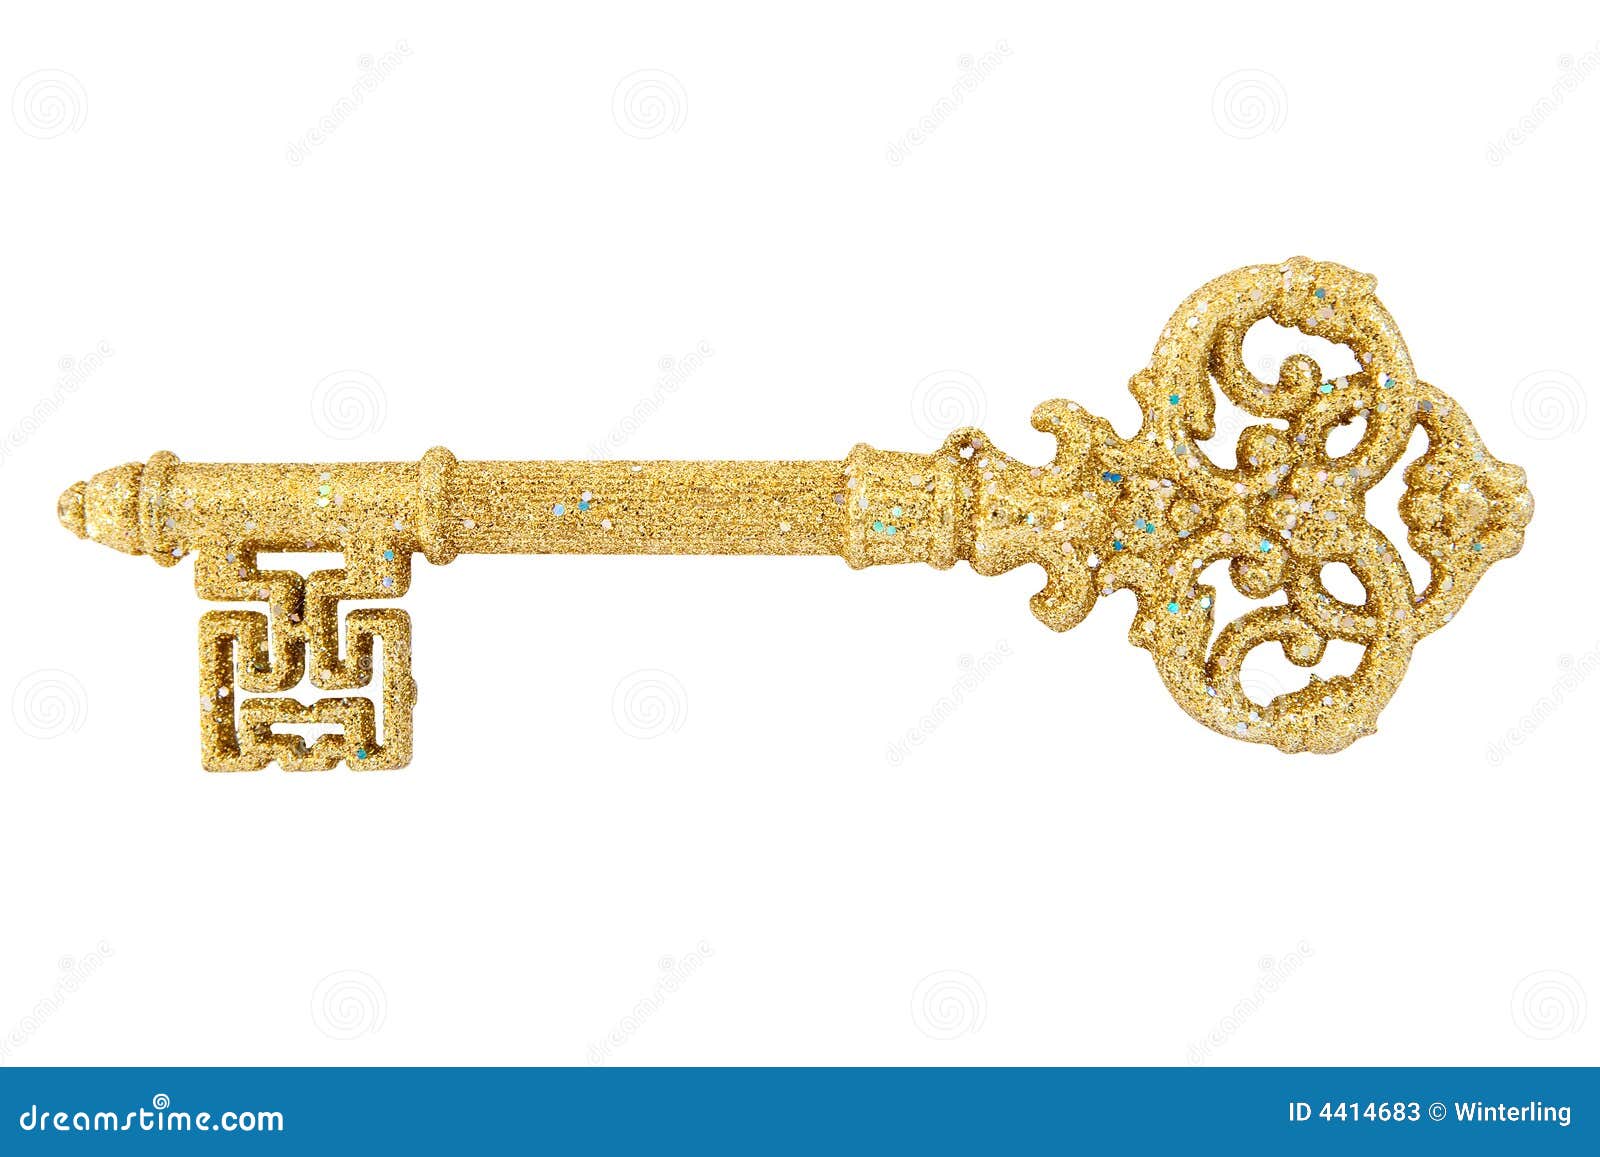 Golden Key Ministry